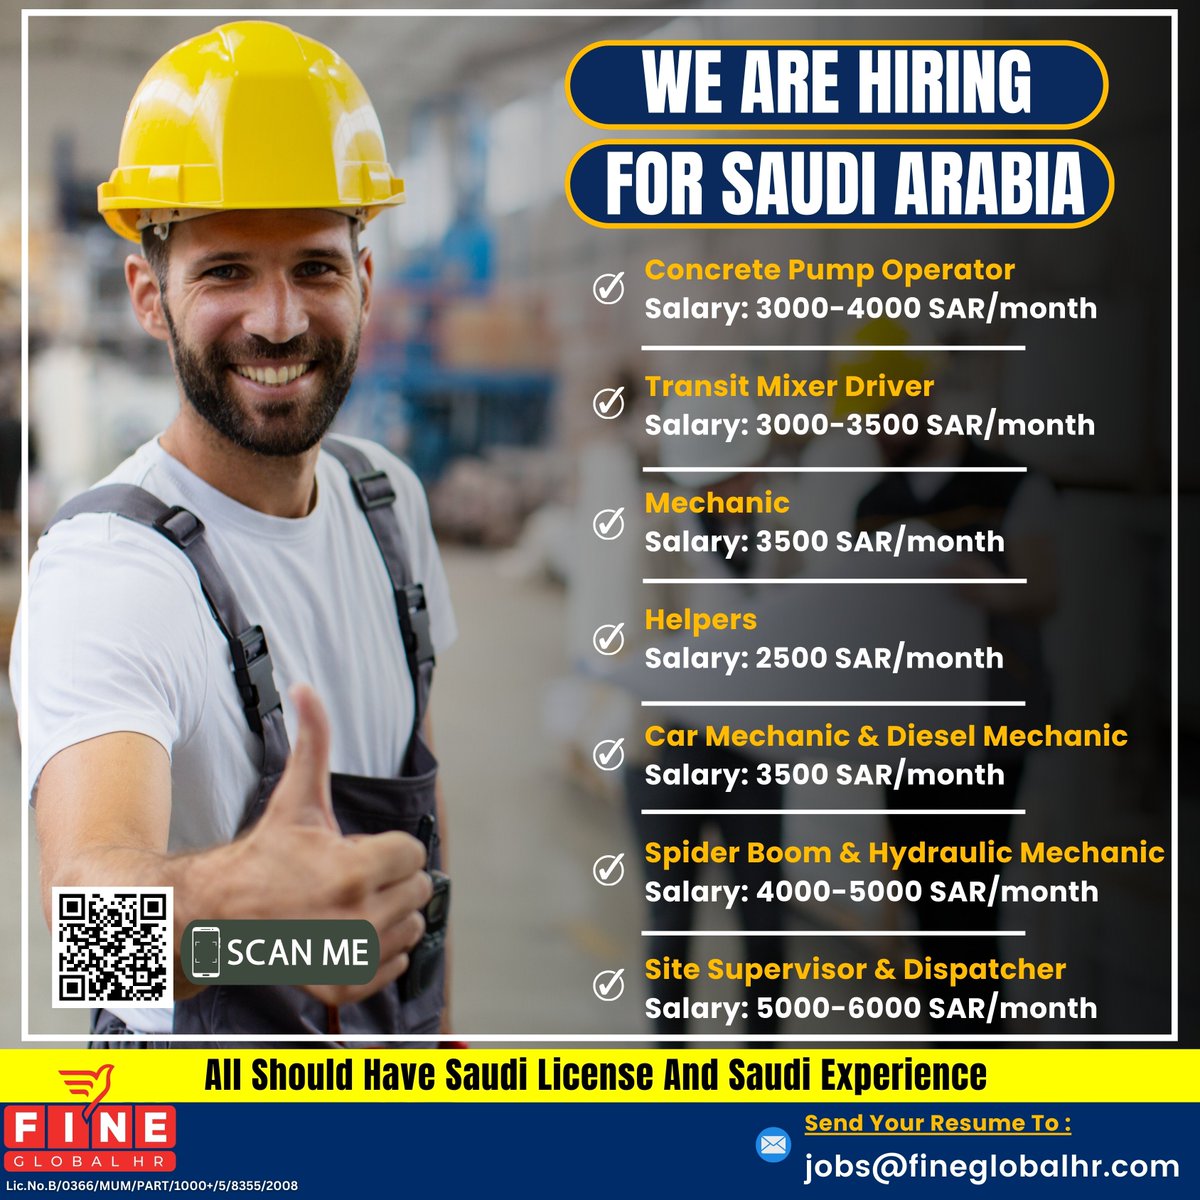 #viralpost #hiring #fineglobalhr #jobs #vacancy #abroad #viral #SAUDI_ARABIA #jobsearch #jobseekers